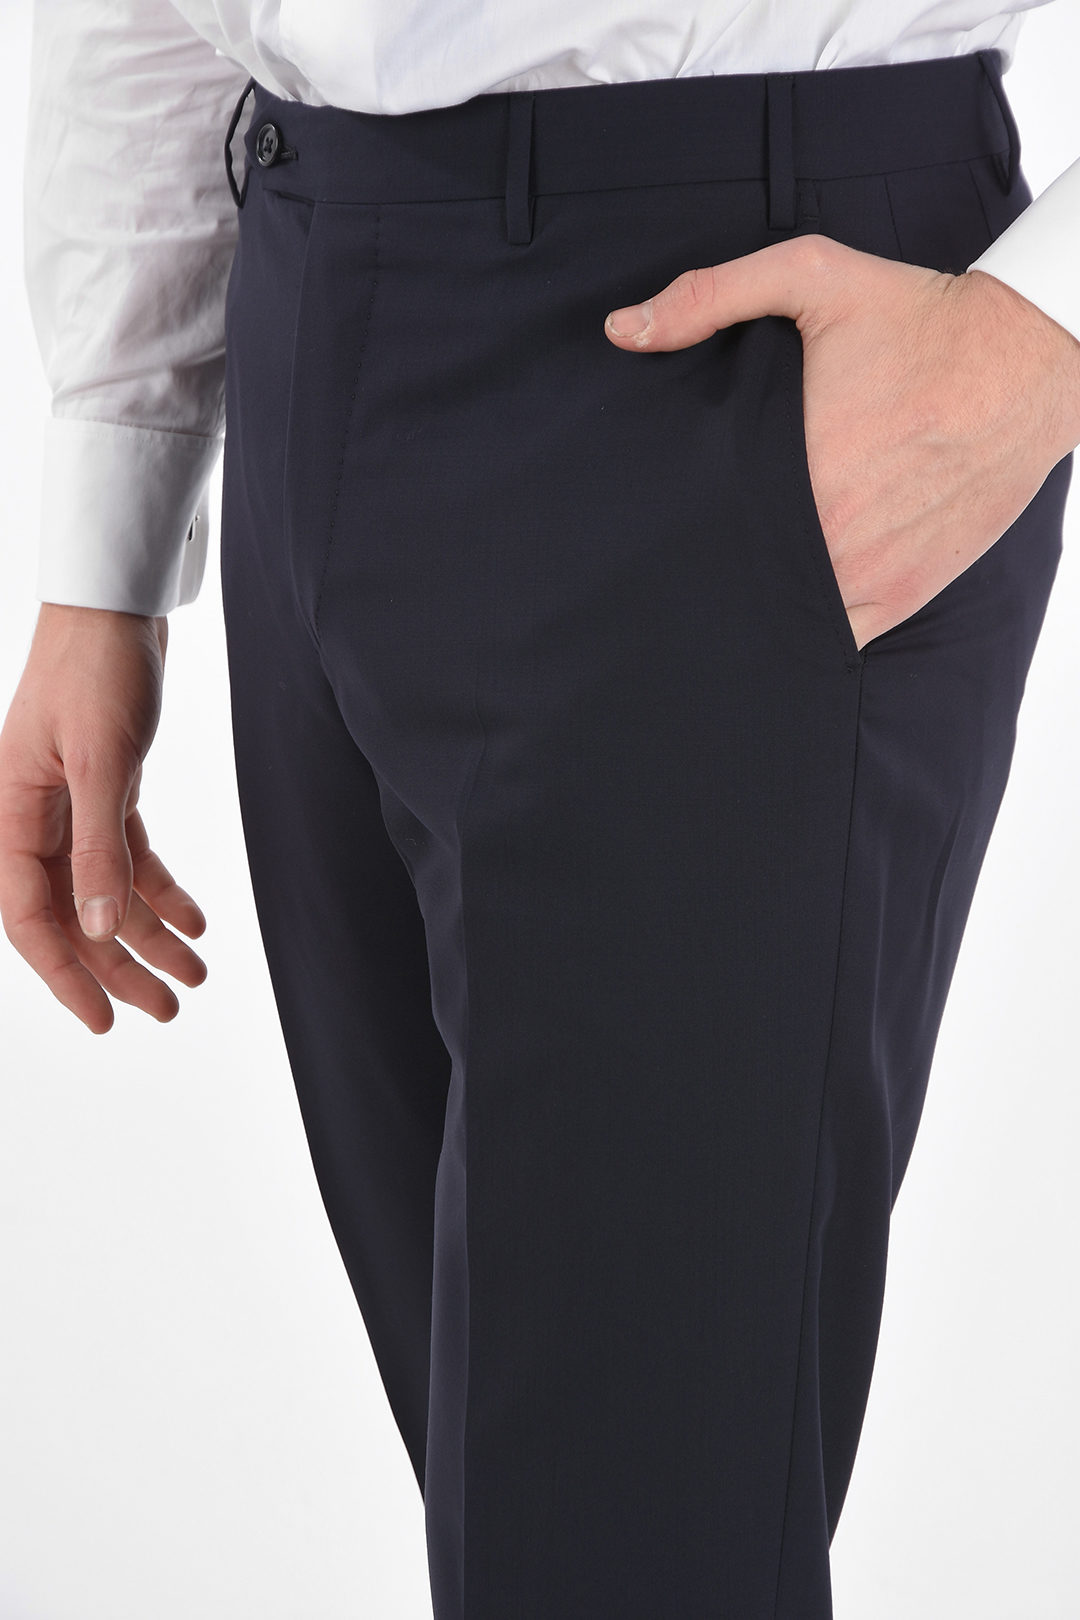 Glen Plaid Pattern Jacket with Cuffed Dress Pants | SOLETOPIA